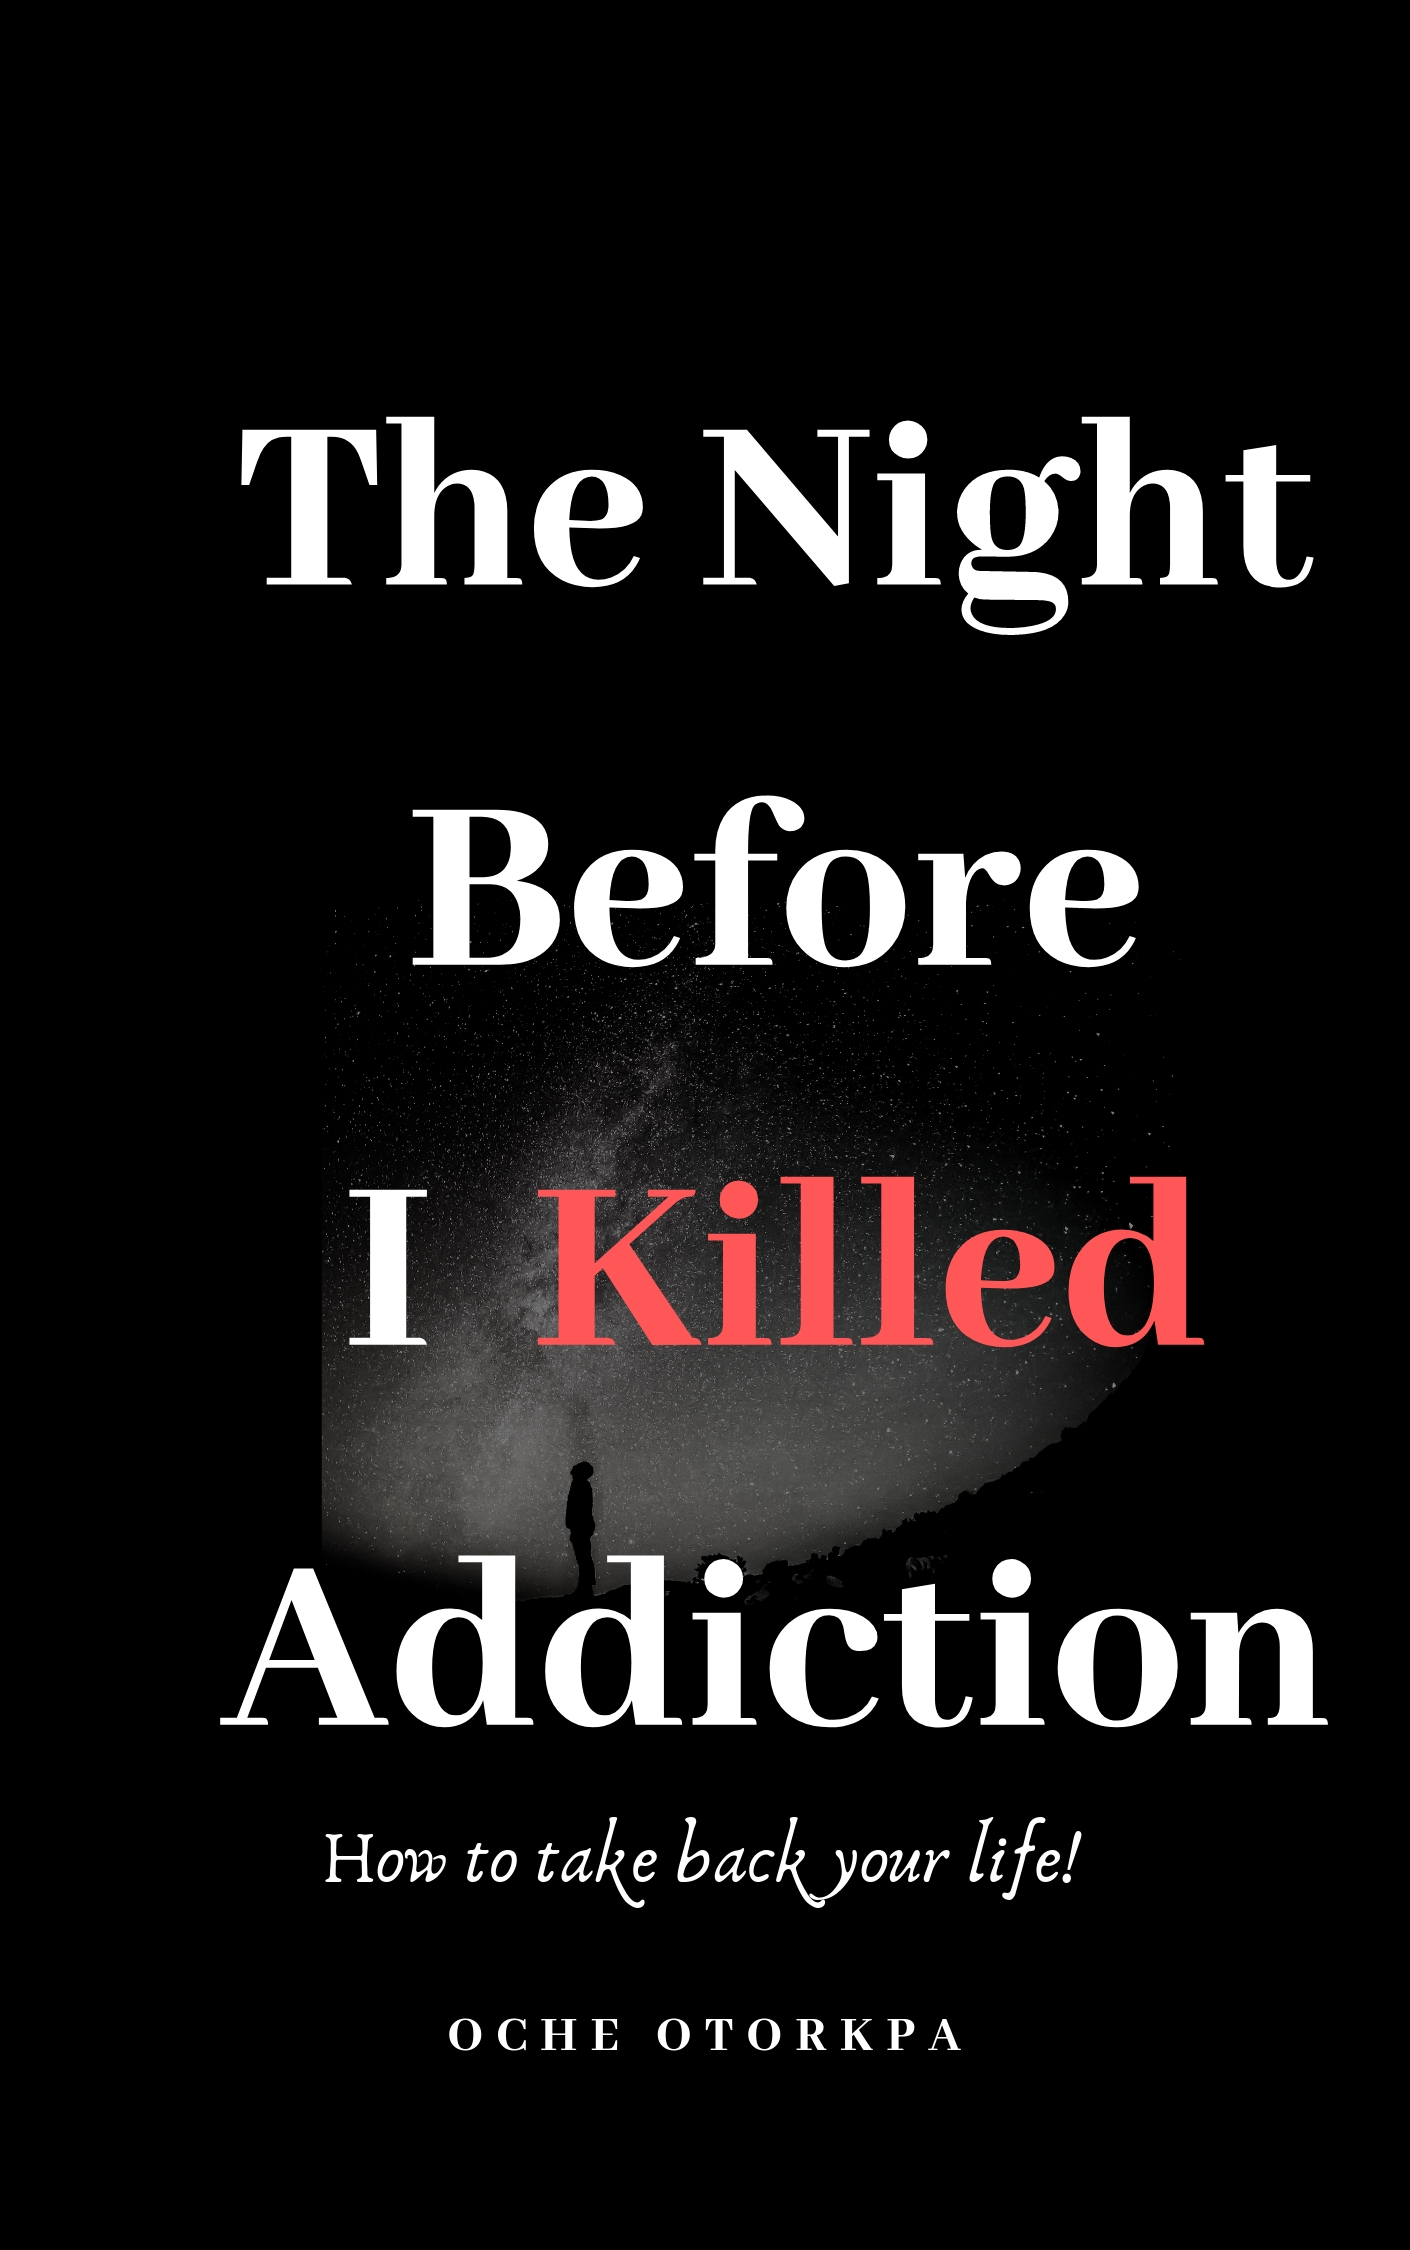 The Night Before I Killed Addiction